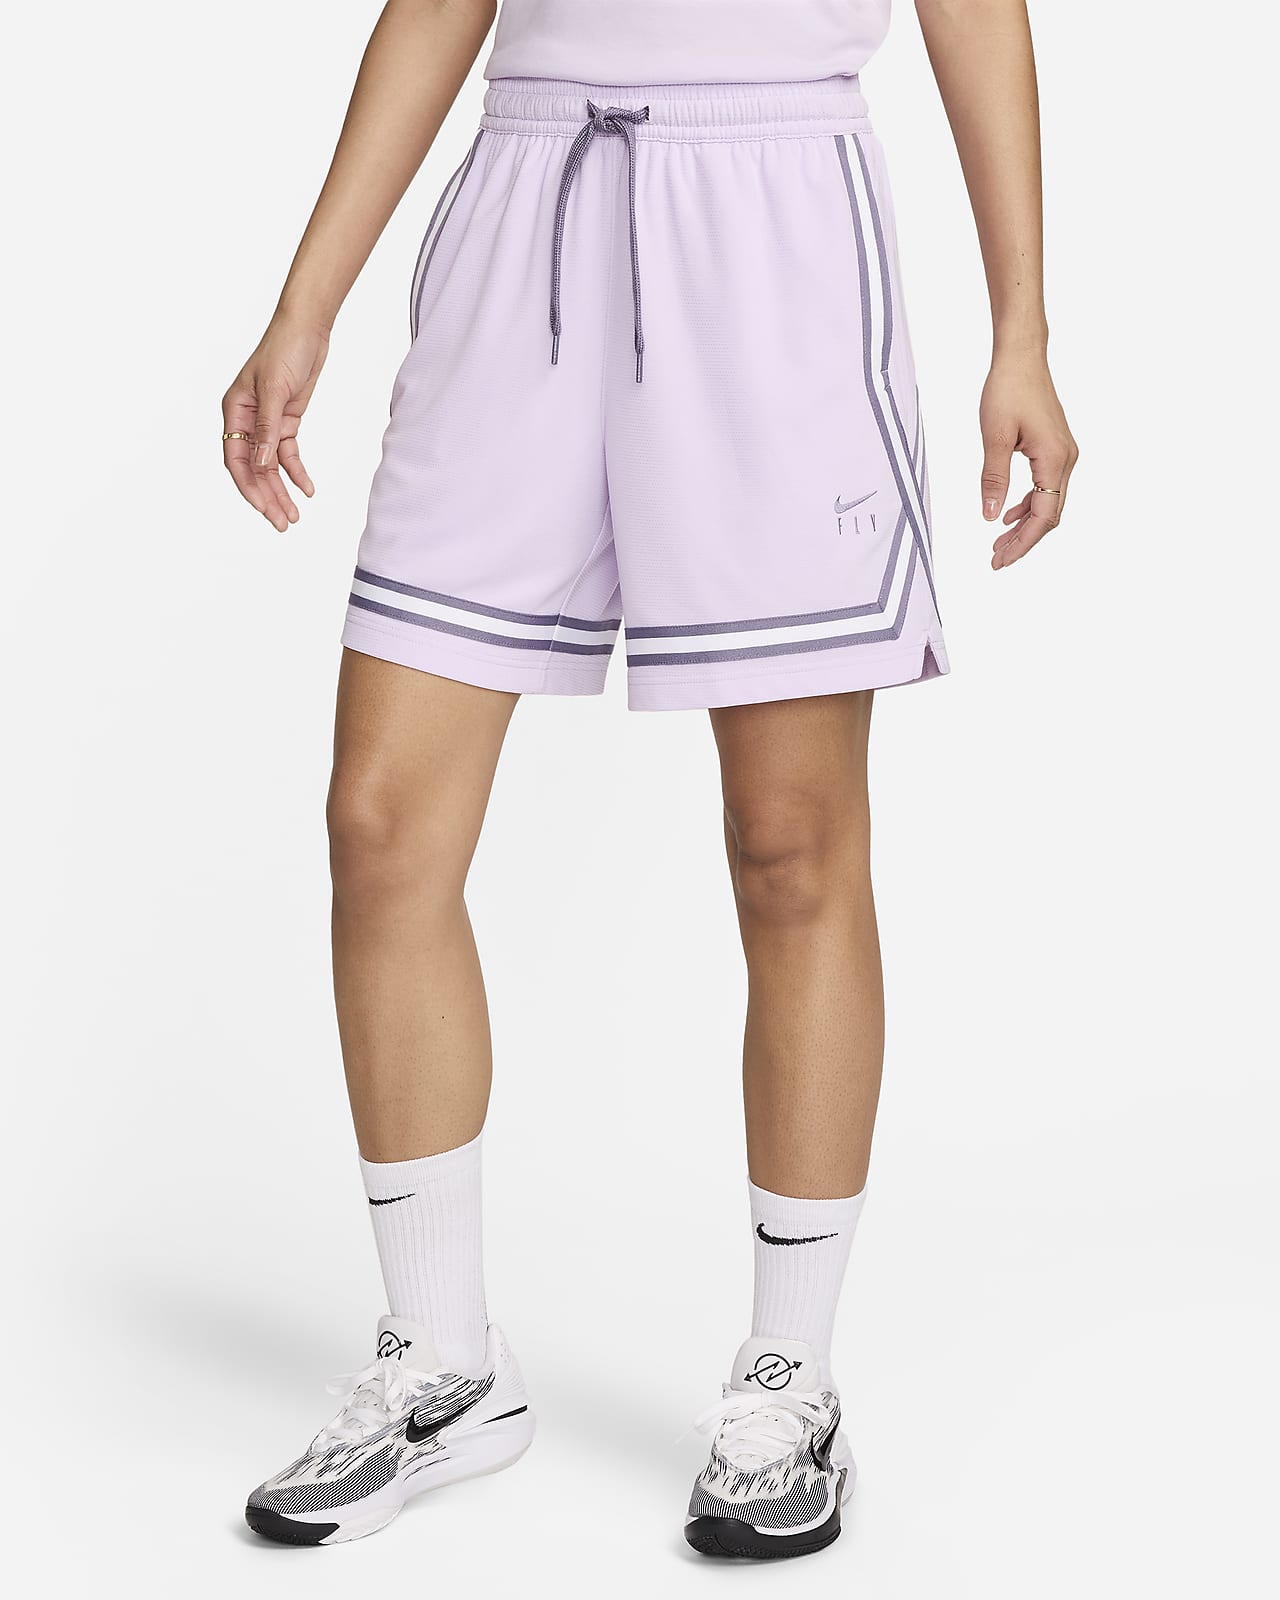 Shorts de básquetbol para mujer Nike Fly Crossover